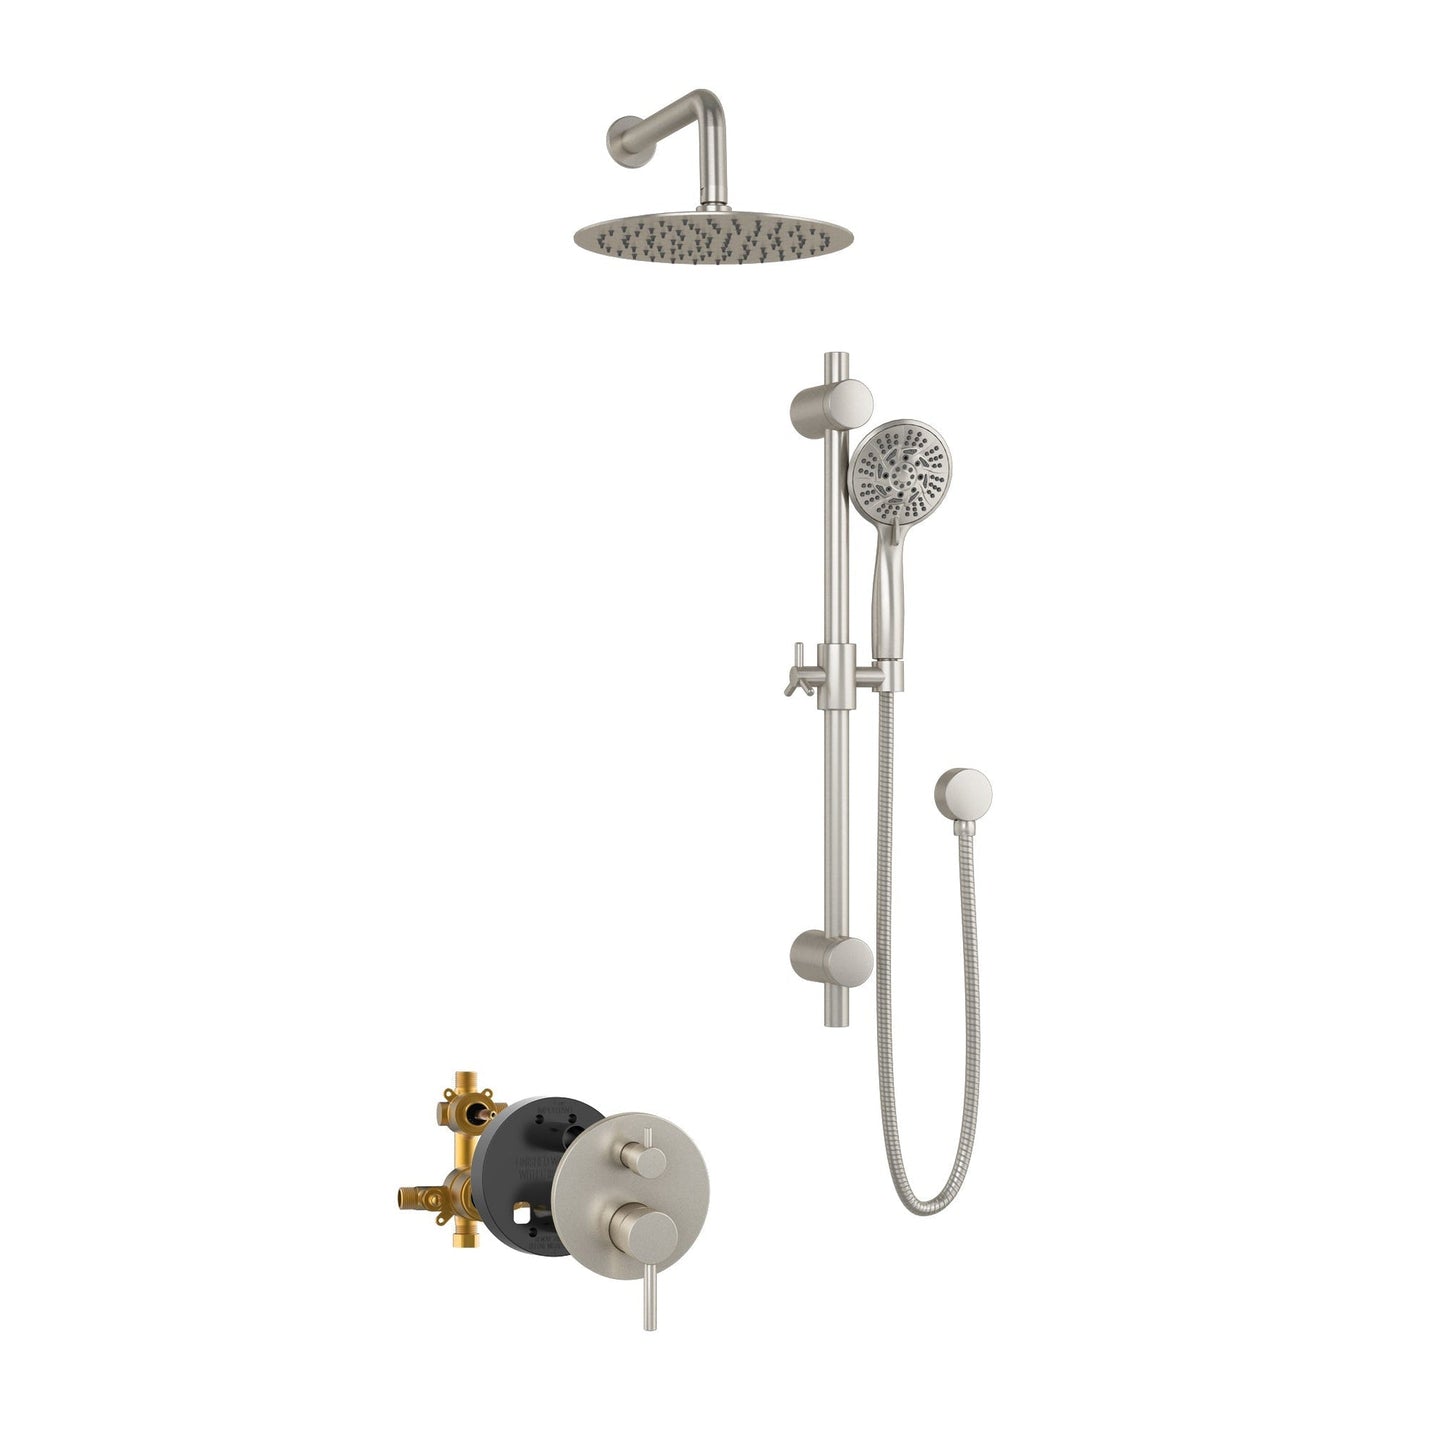 PULSE ShowerSpas Refuge Rain Shower Head 5-Function Hand Shower 2.5 GPM Shower System Combo in Brushed Nickel Finish